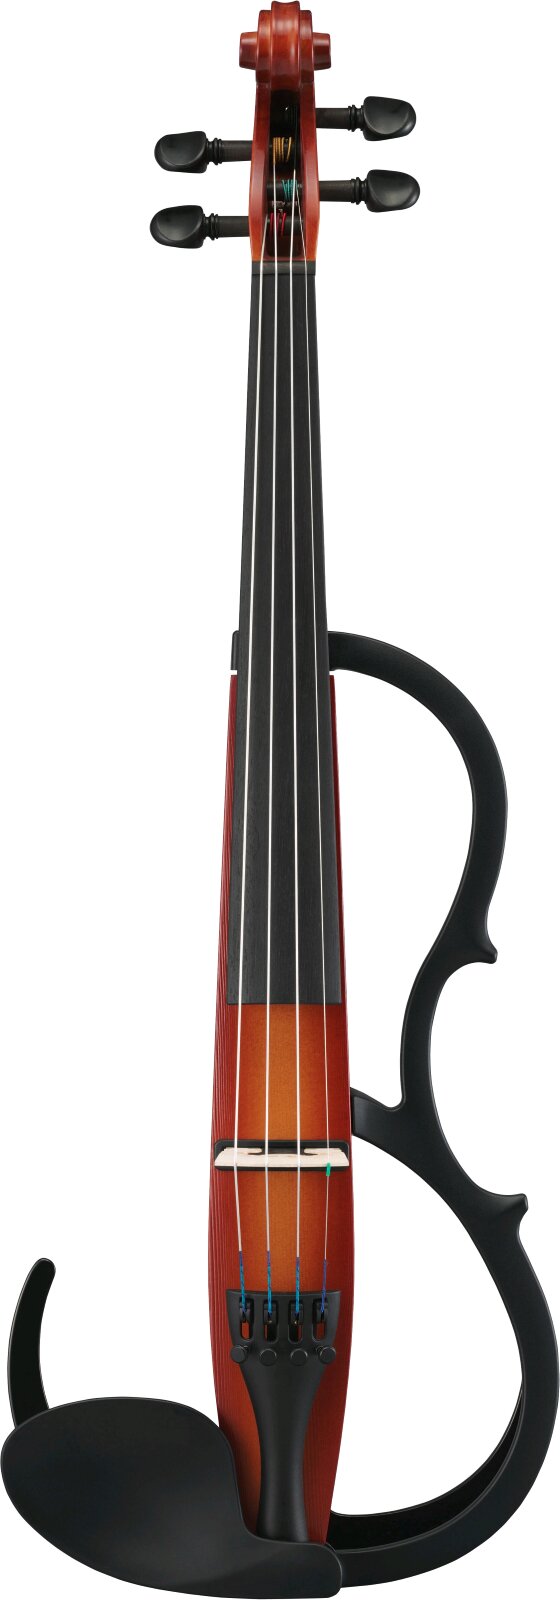 Yamaha Strings SV-250 BR Violon Silent brun : photo 1